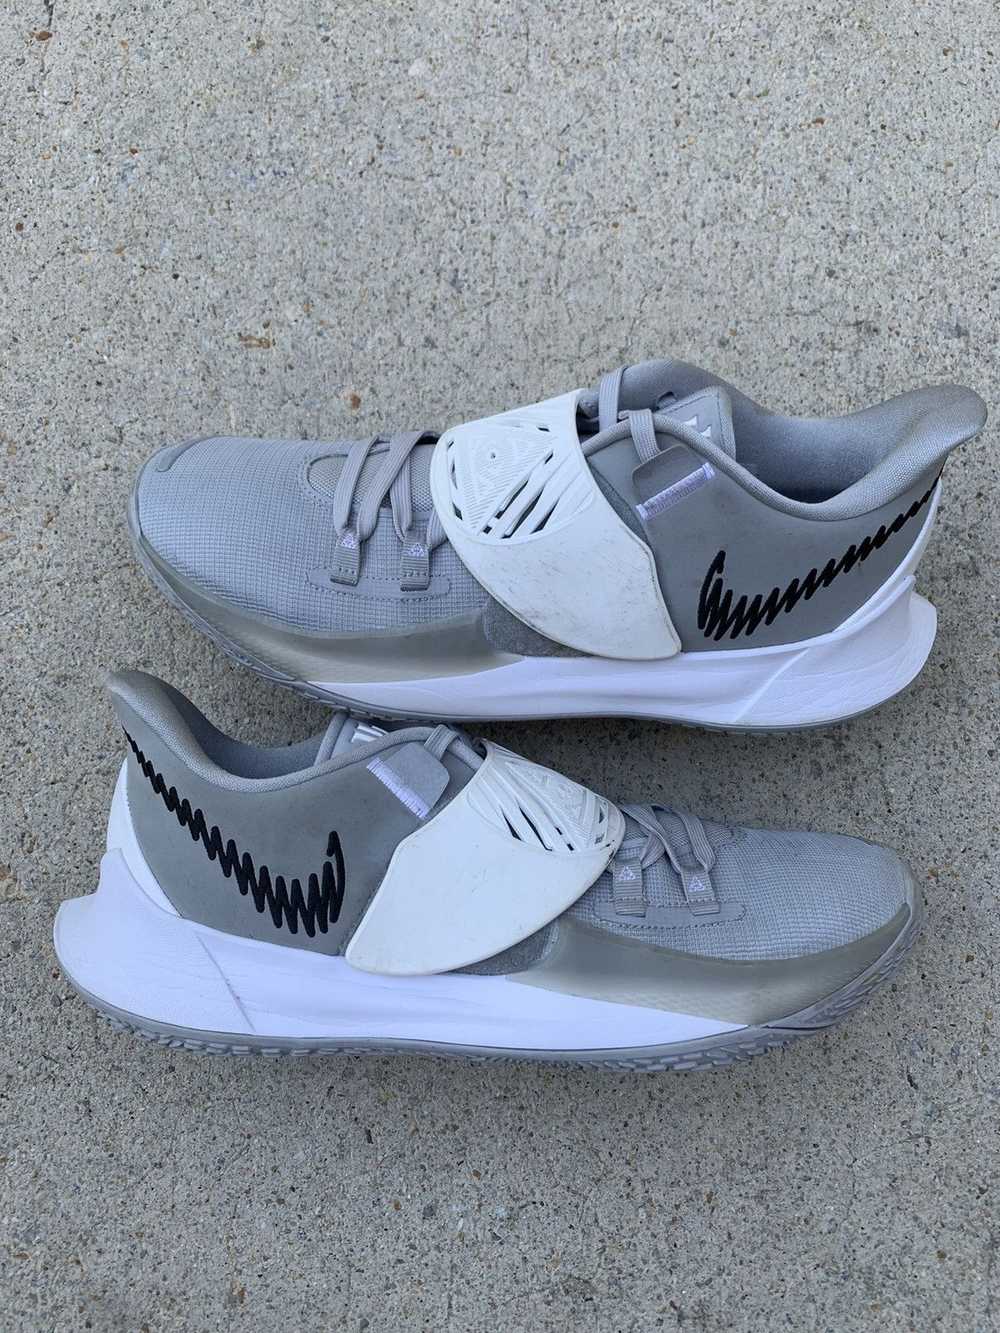 Nike Nike Kyrie Low 3 Flat Silver Black White - image 1